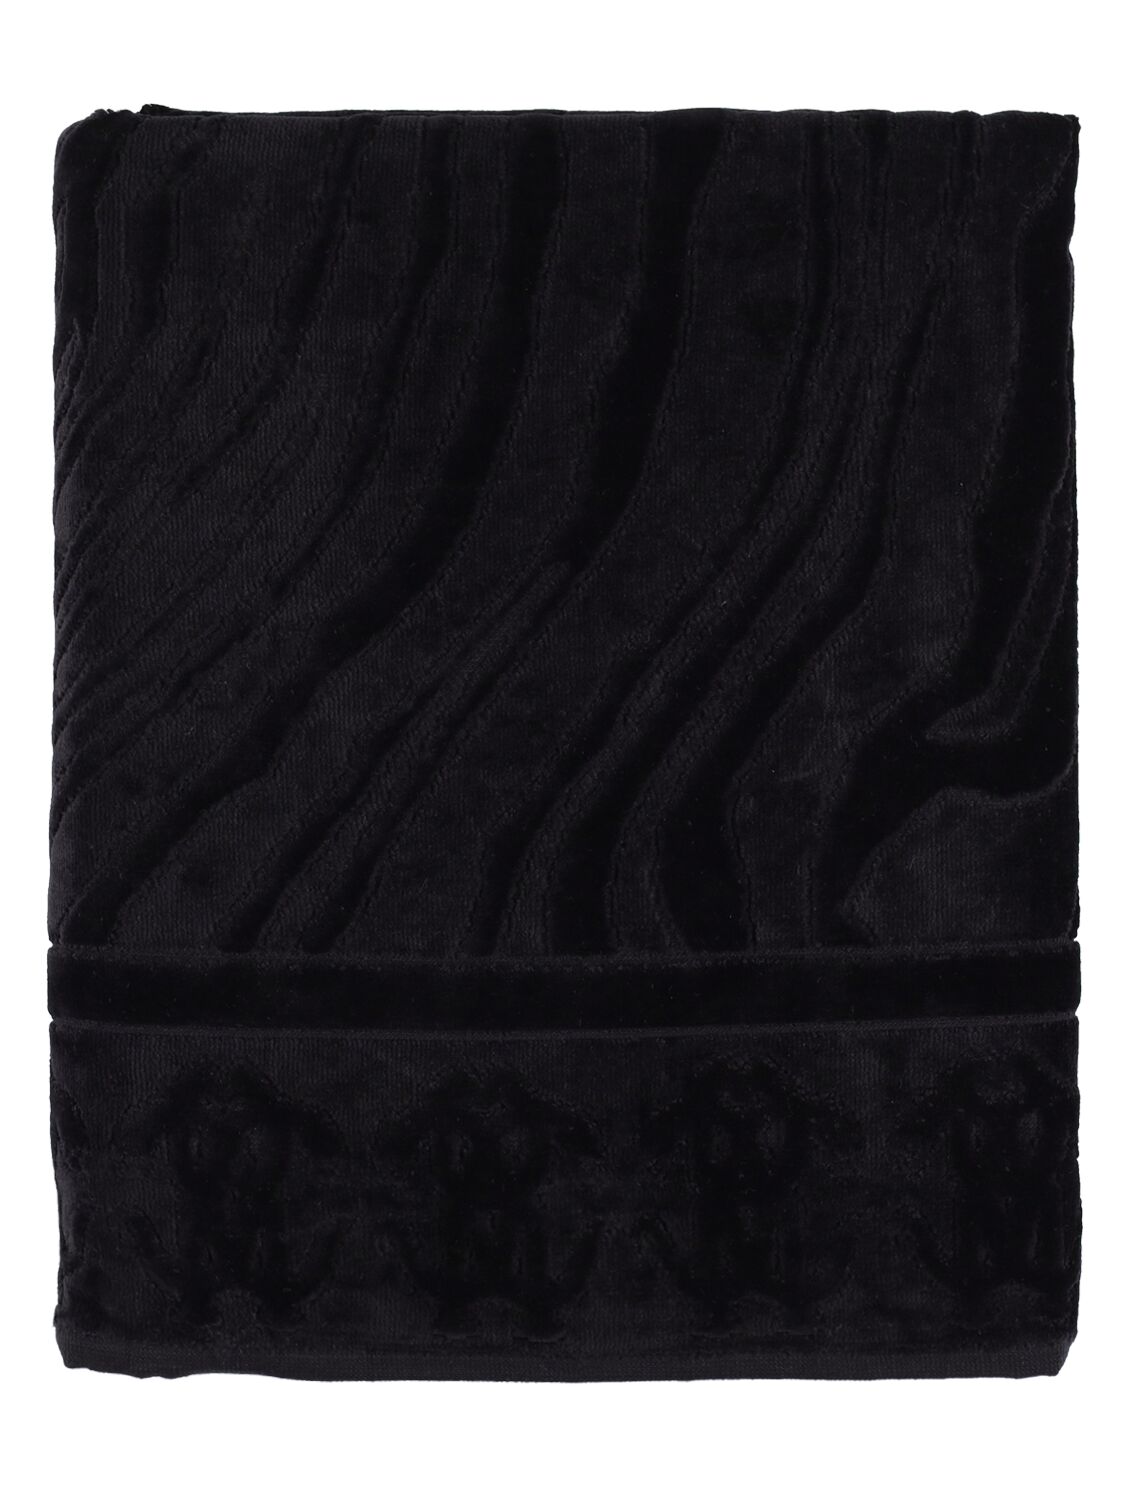 Image of Okapi Towel